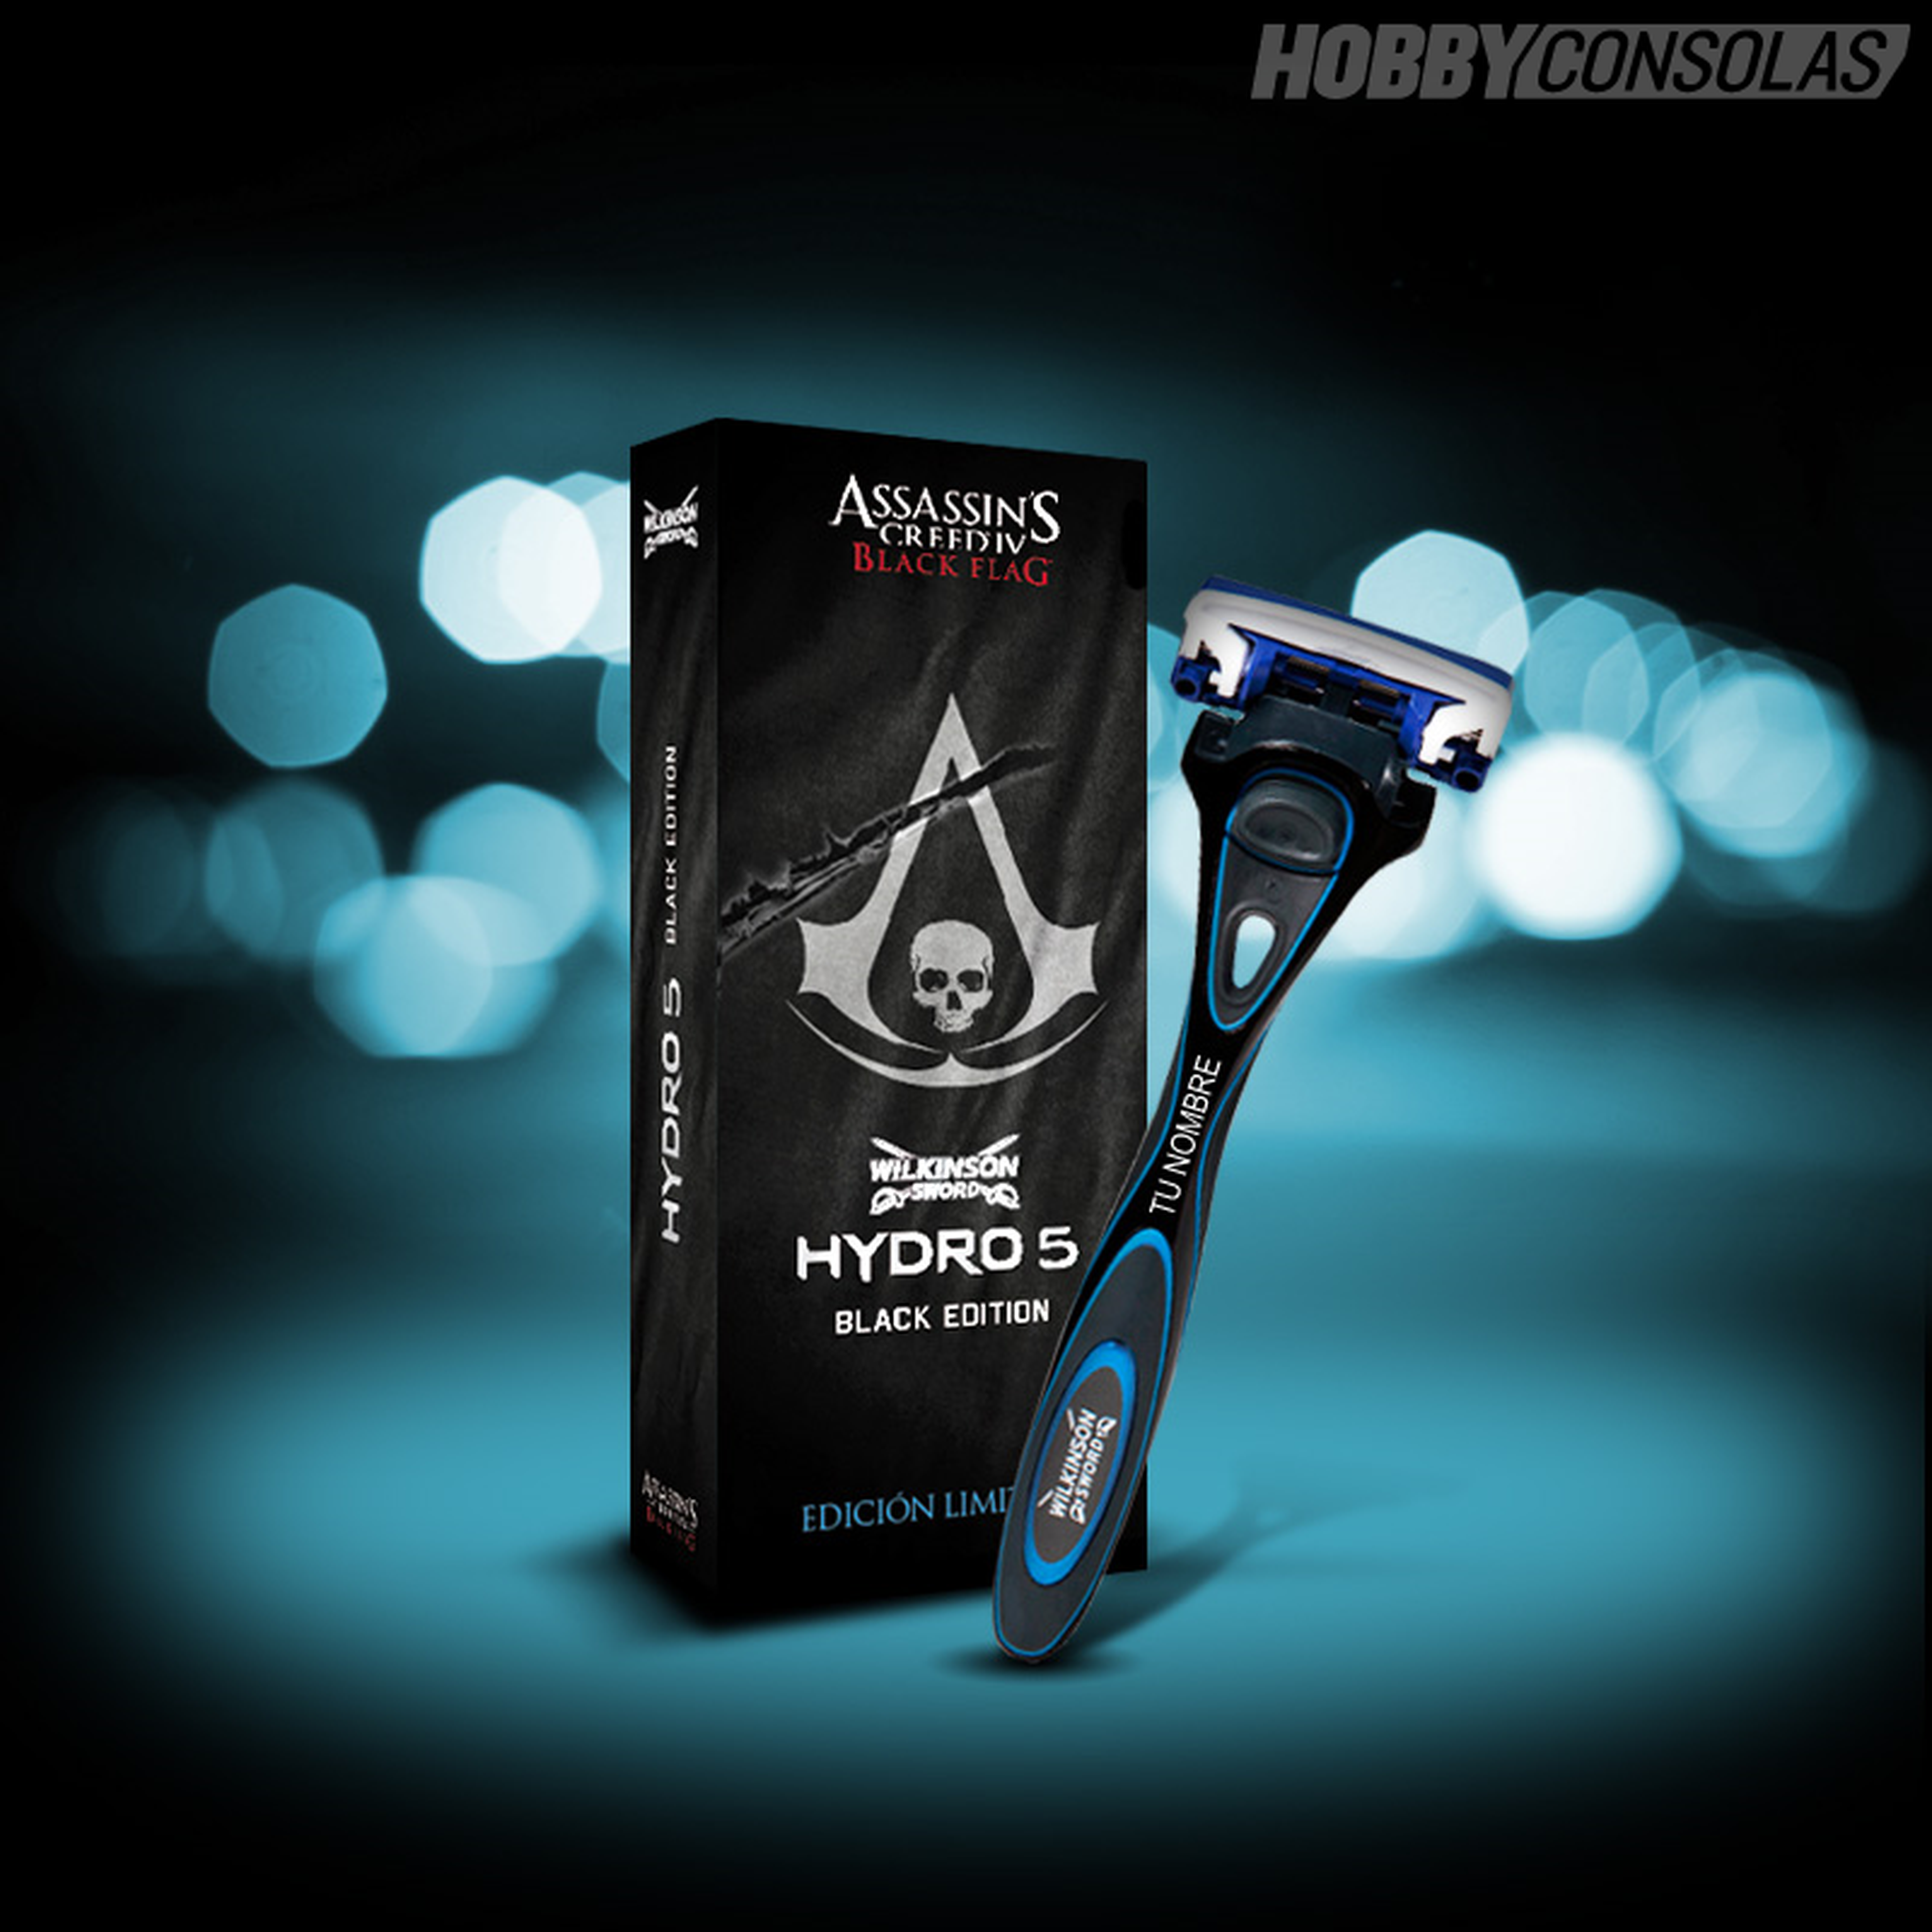 La hoja de afeitar de Assassin's Creed IV, con Hobby Consolas